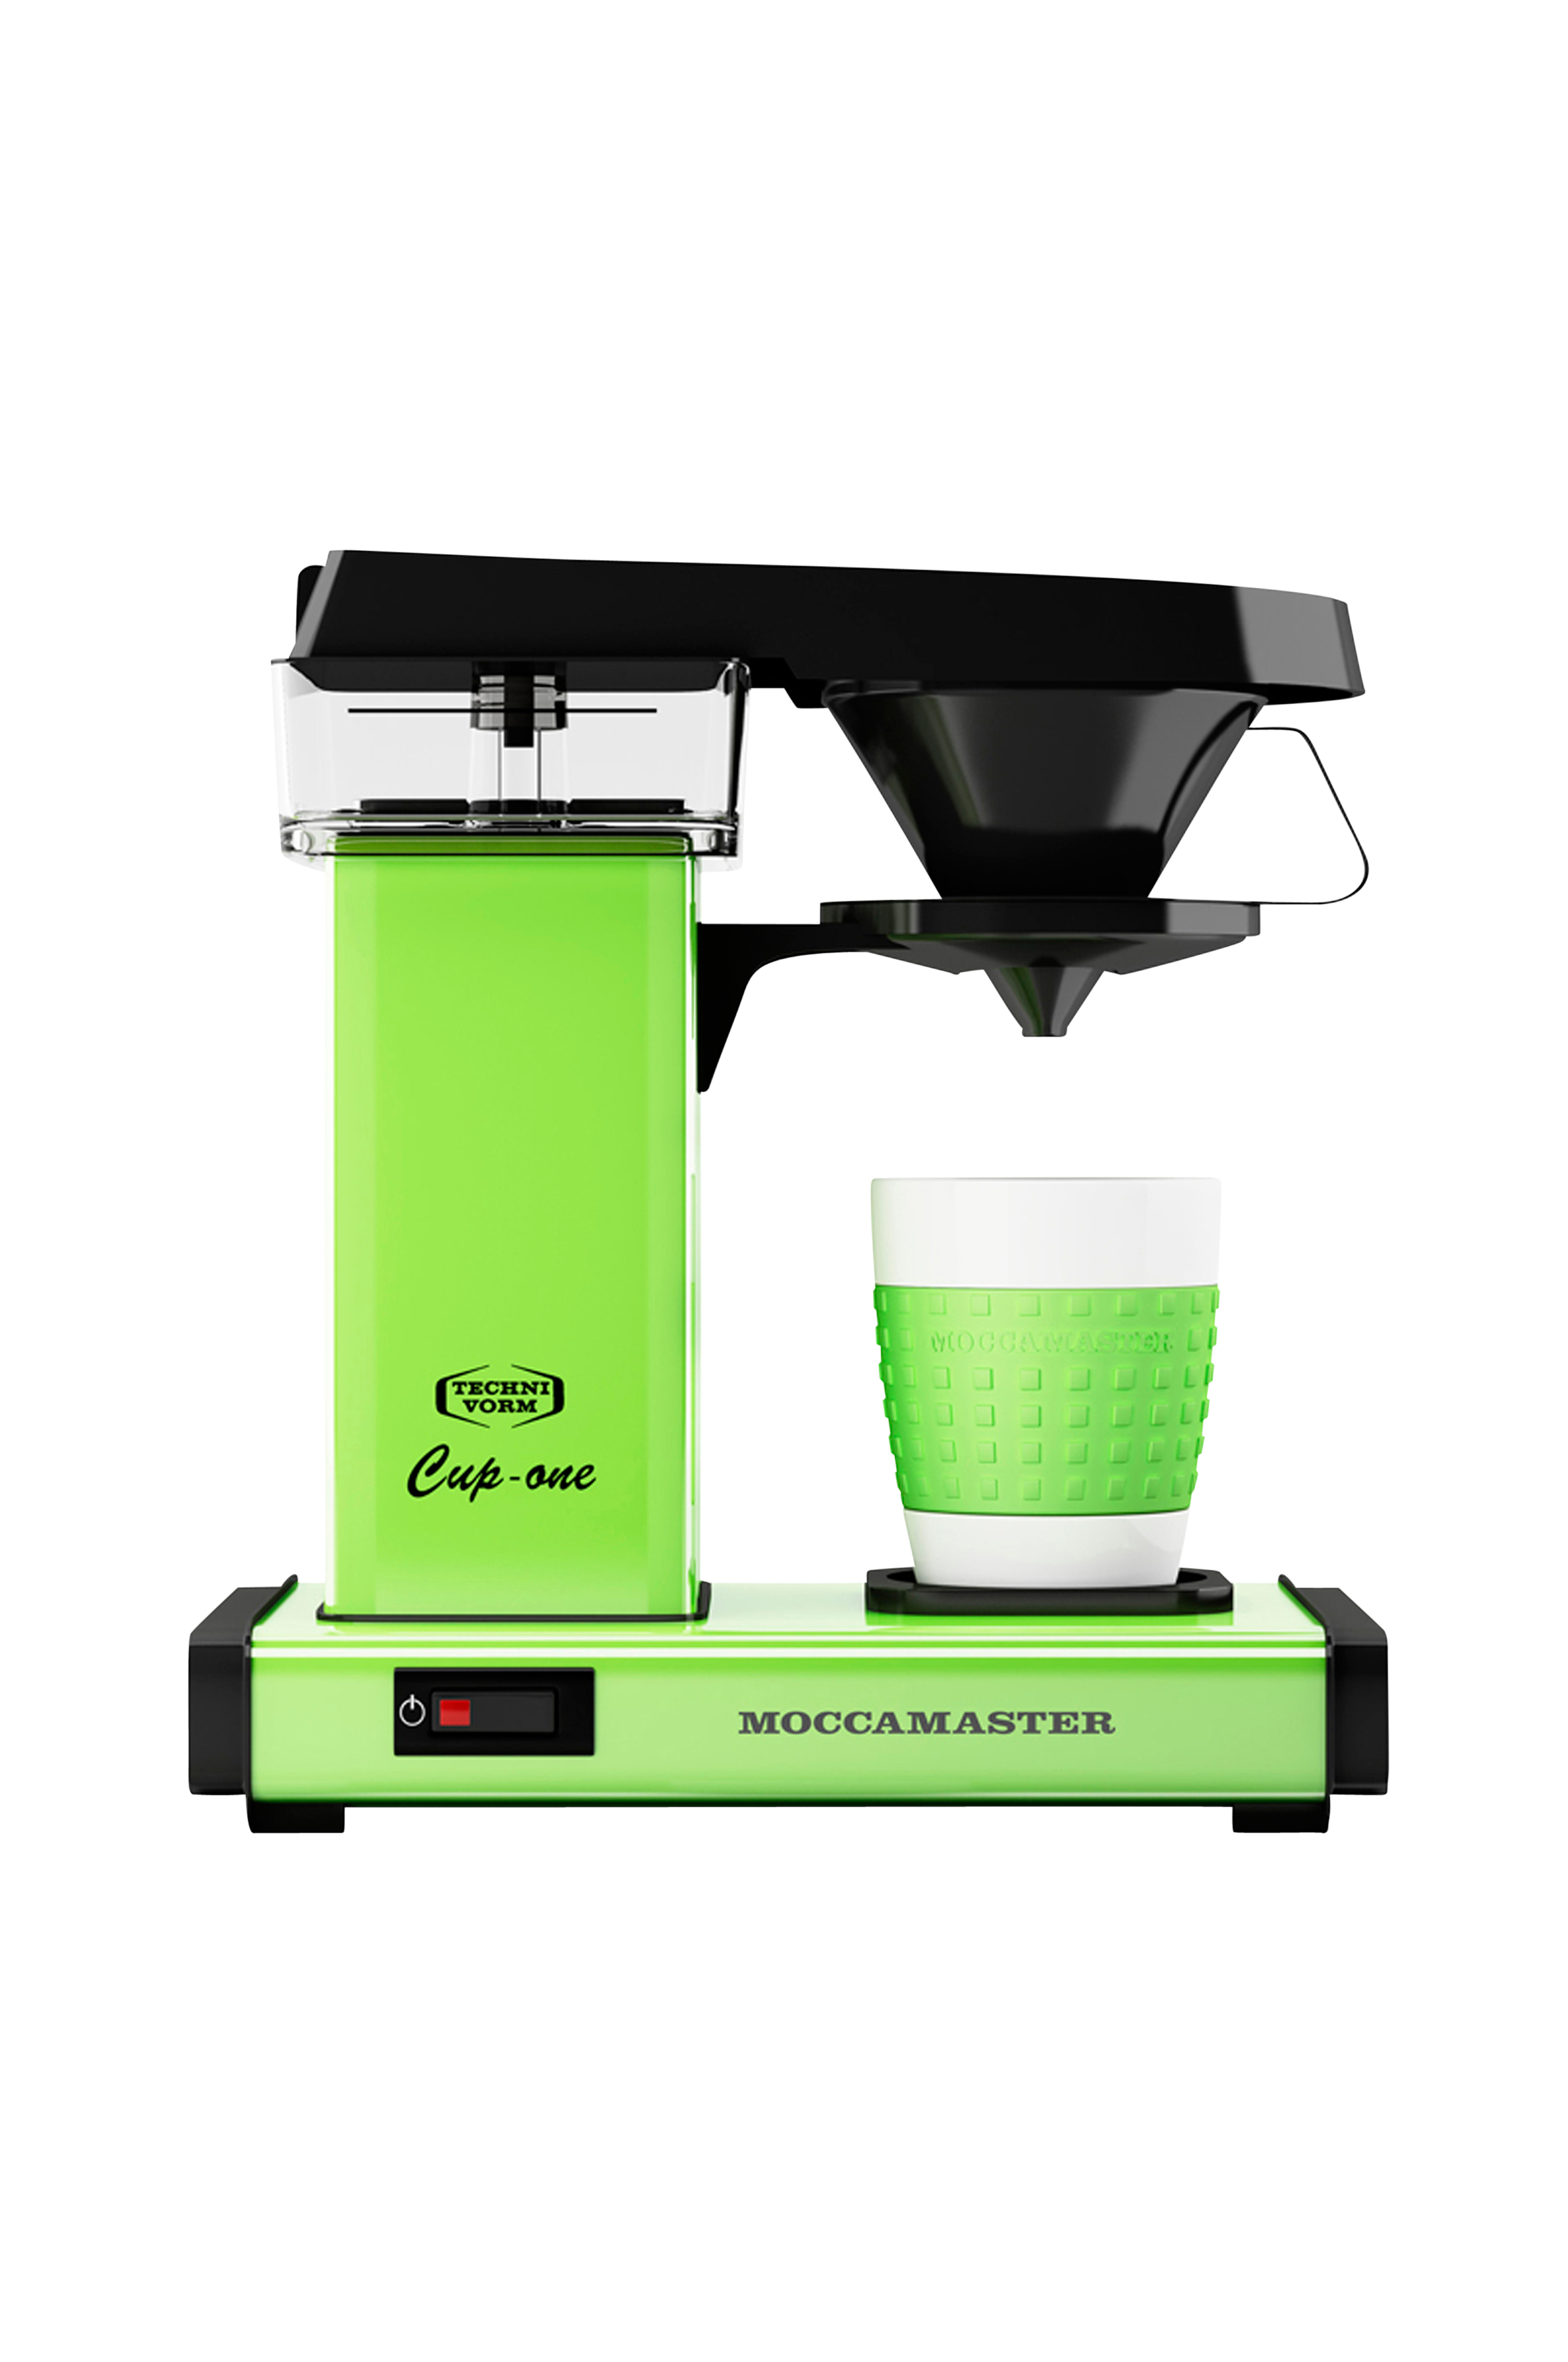 Moccamaster Cup-one Fresh - Kaffemaskiner |